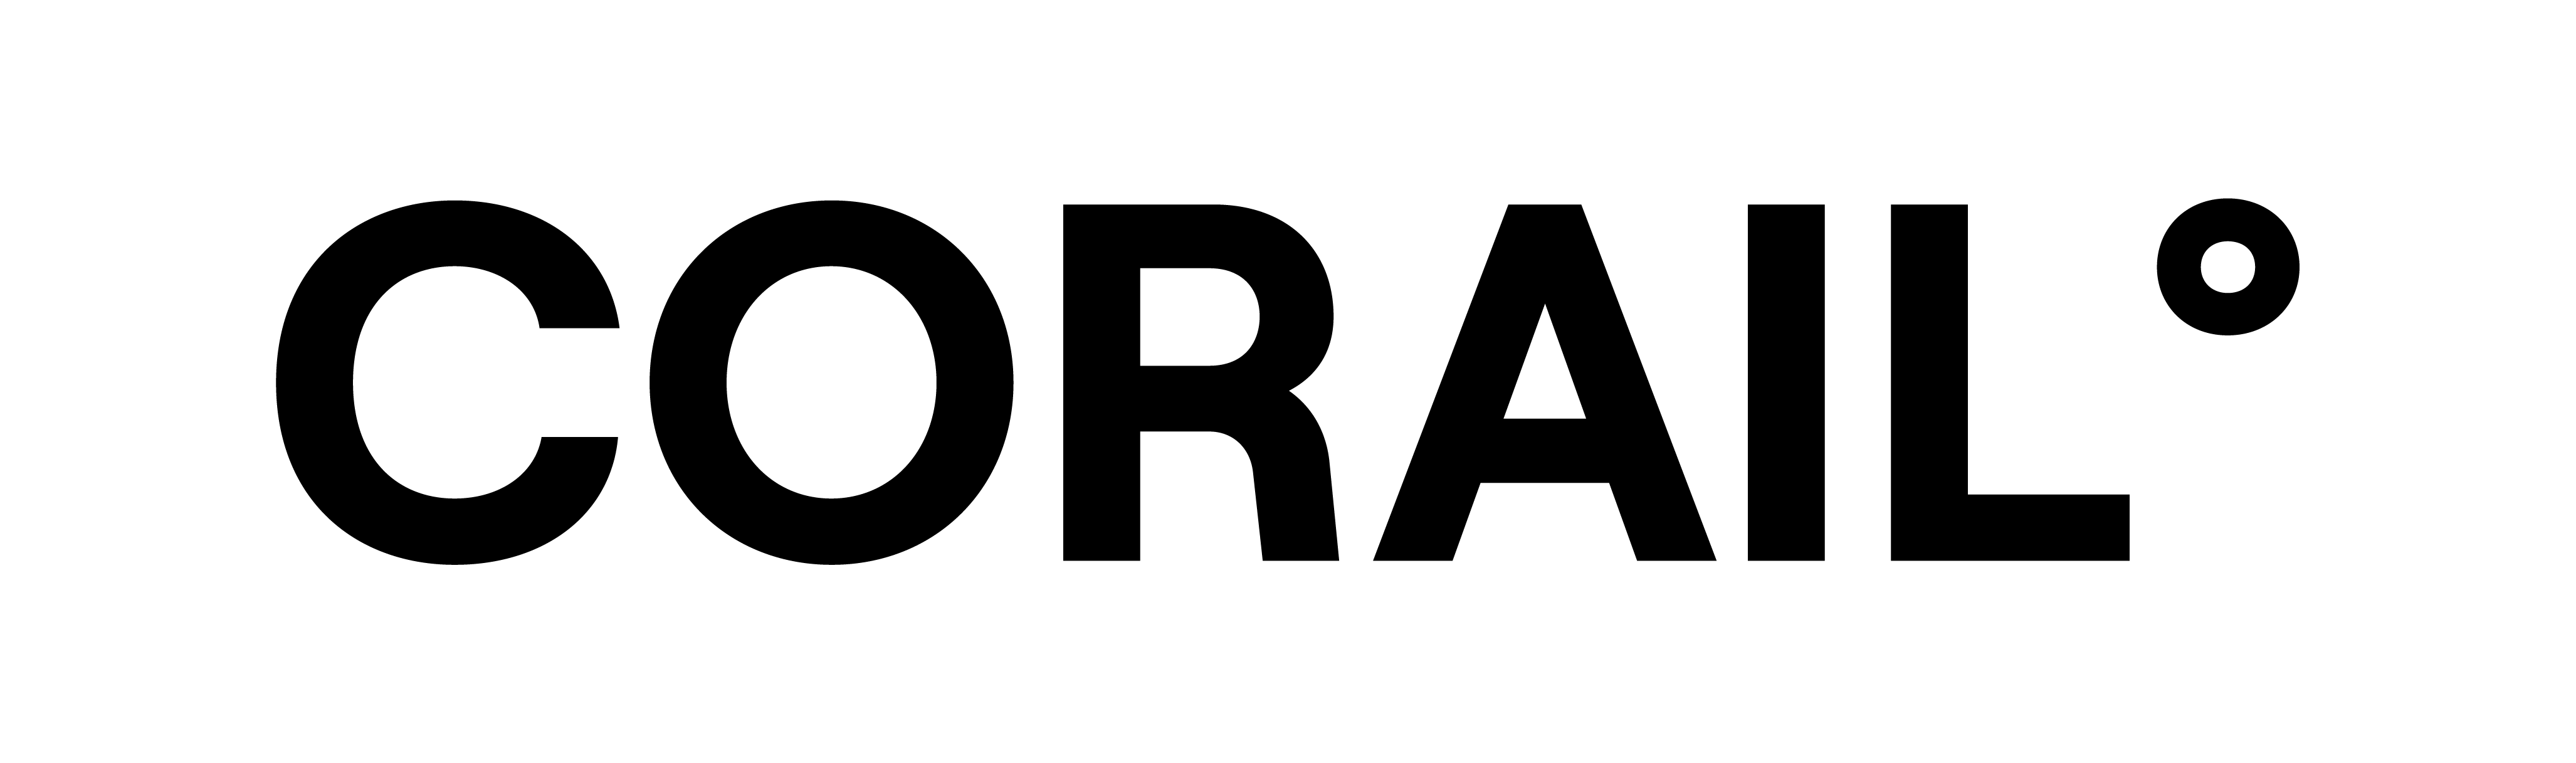 Logo Corail